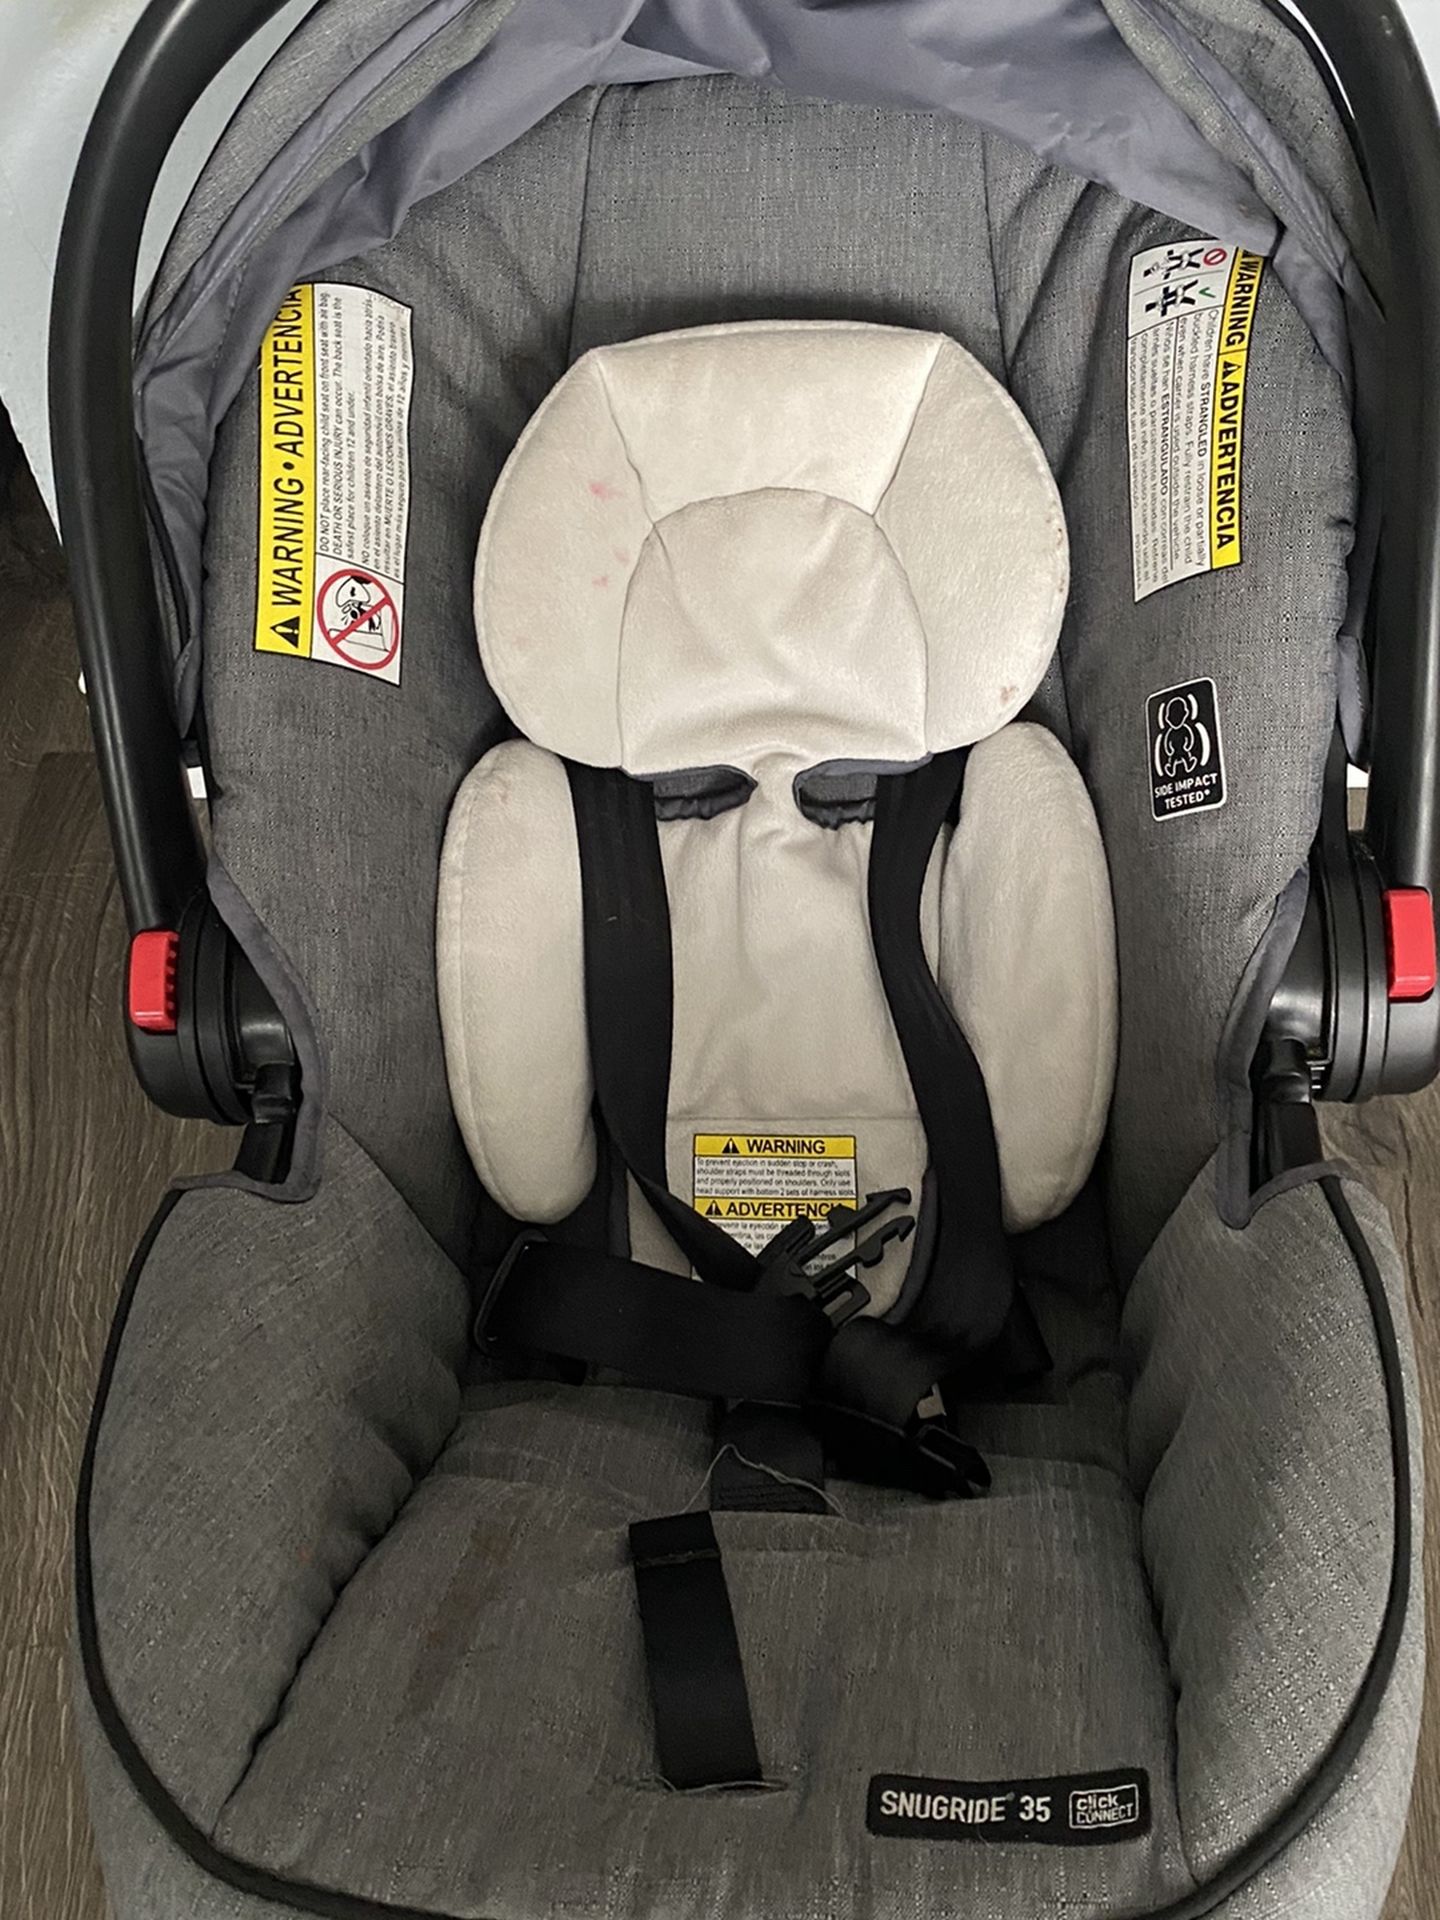 Graco infant Car Seat.